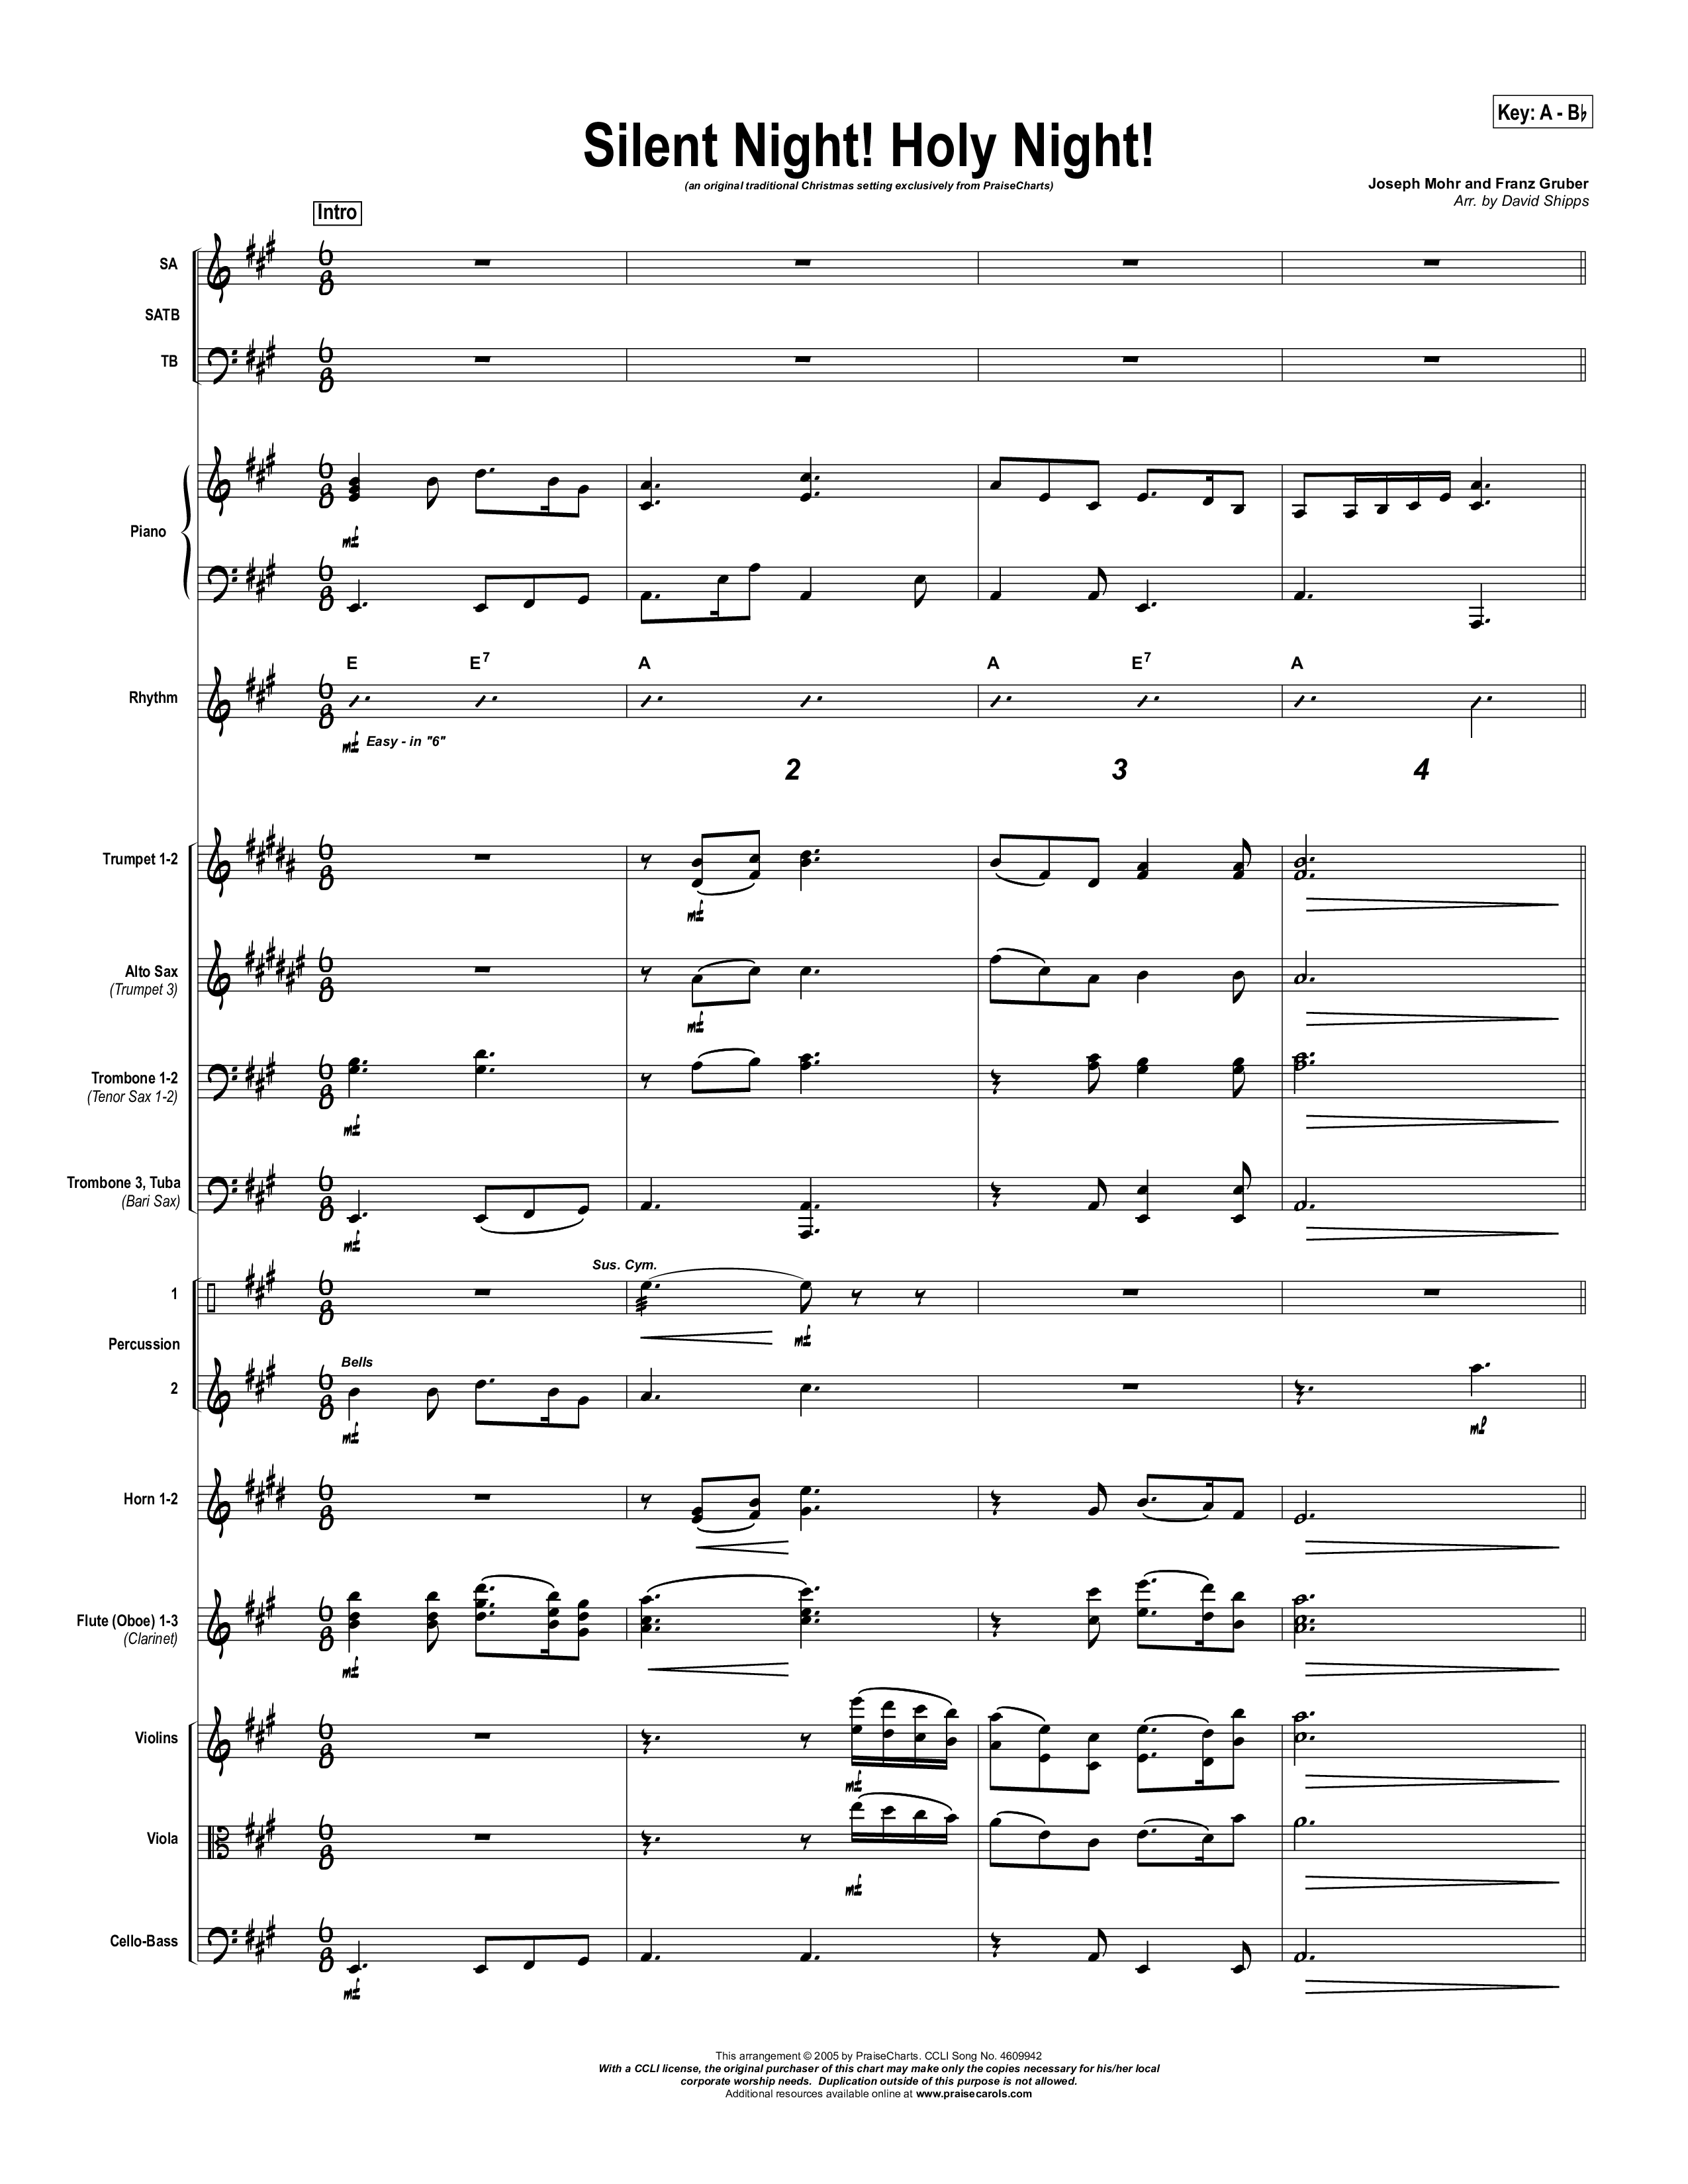 Silent Night Orchestration (Traditional Carol / PraiseCharts)